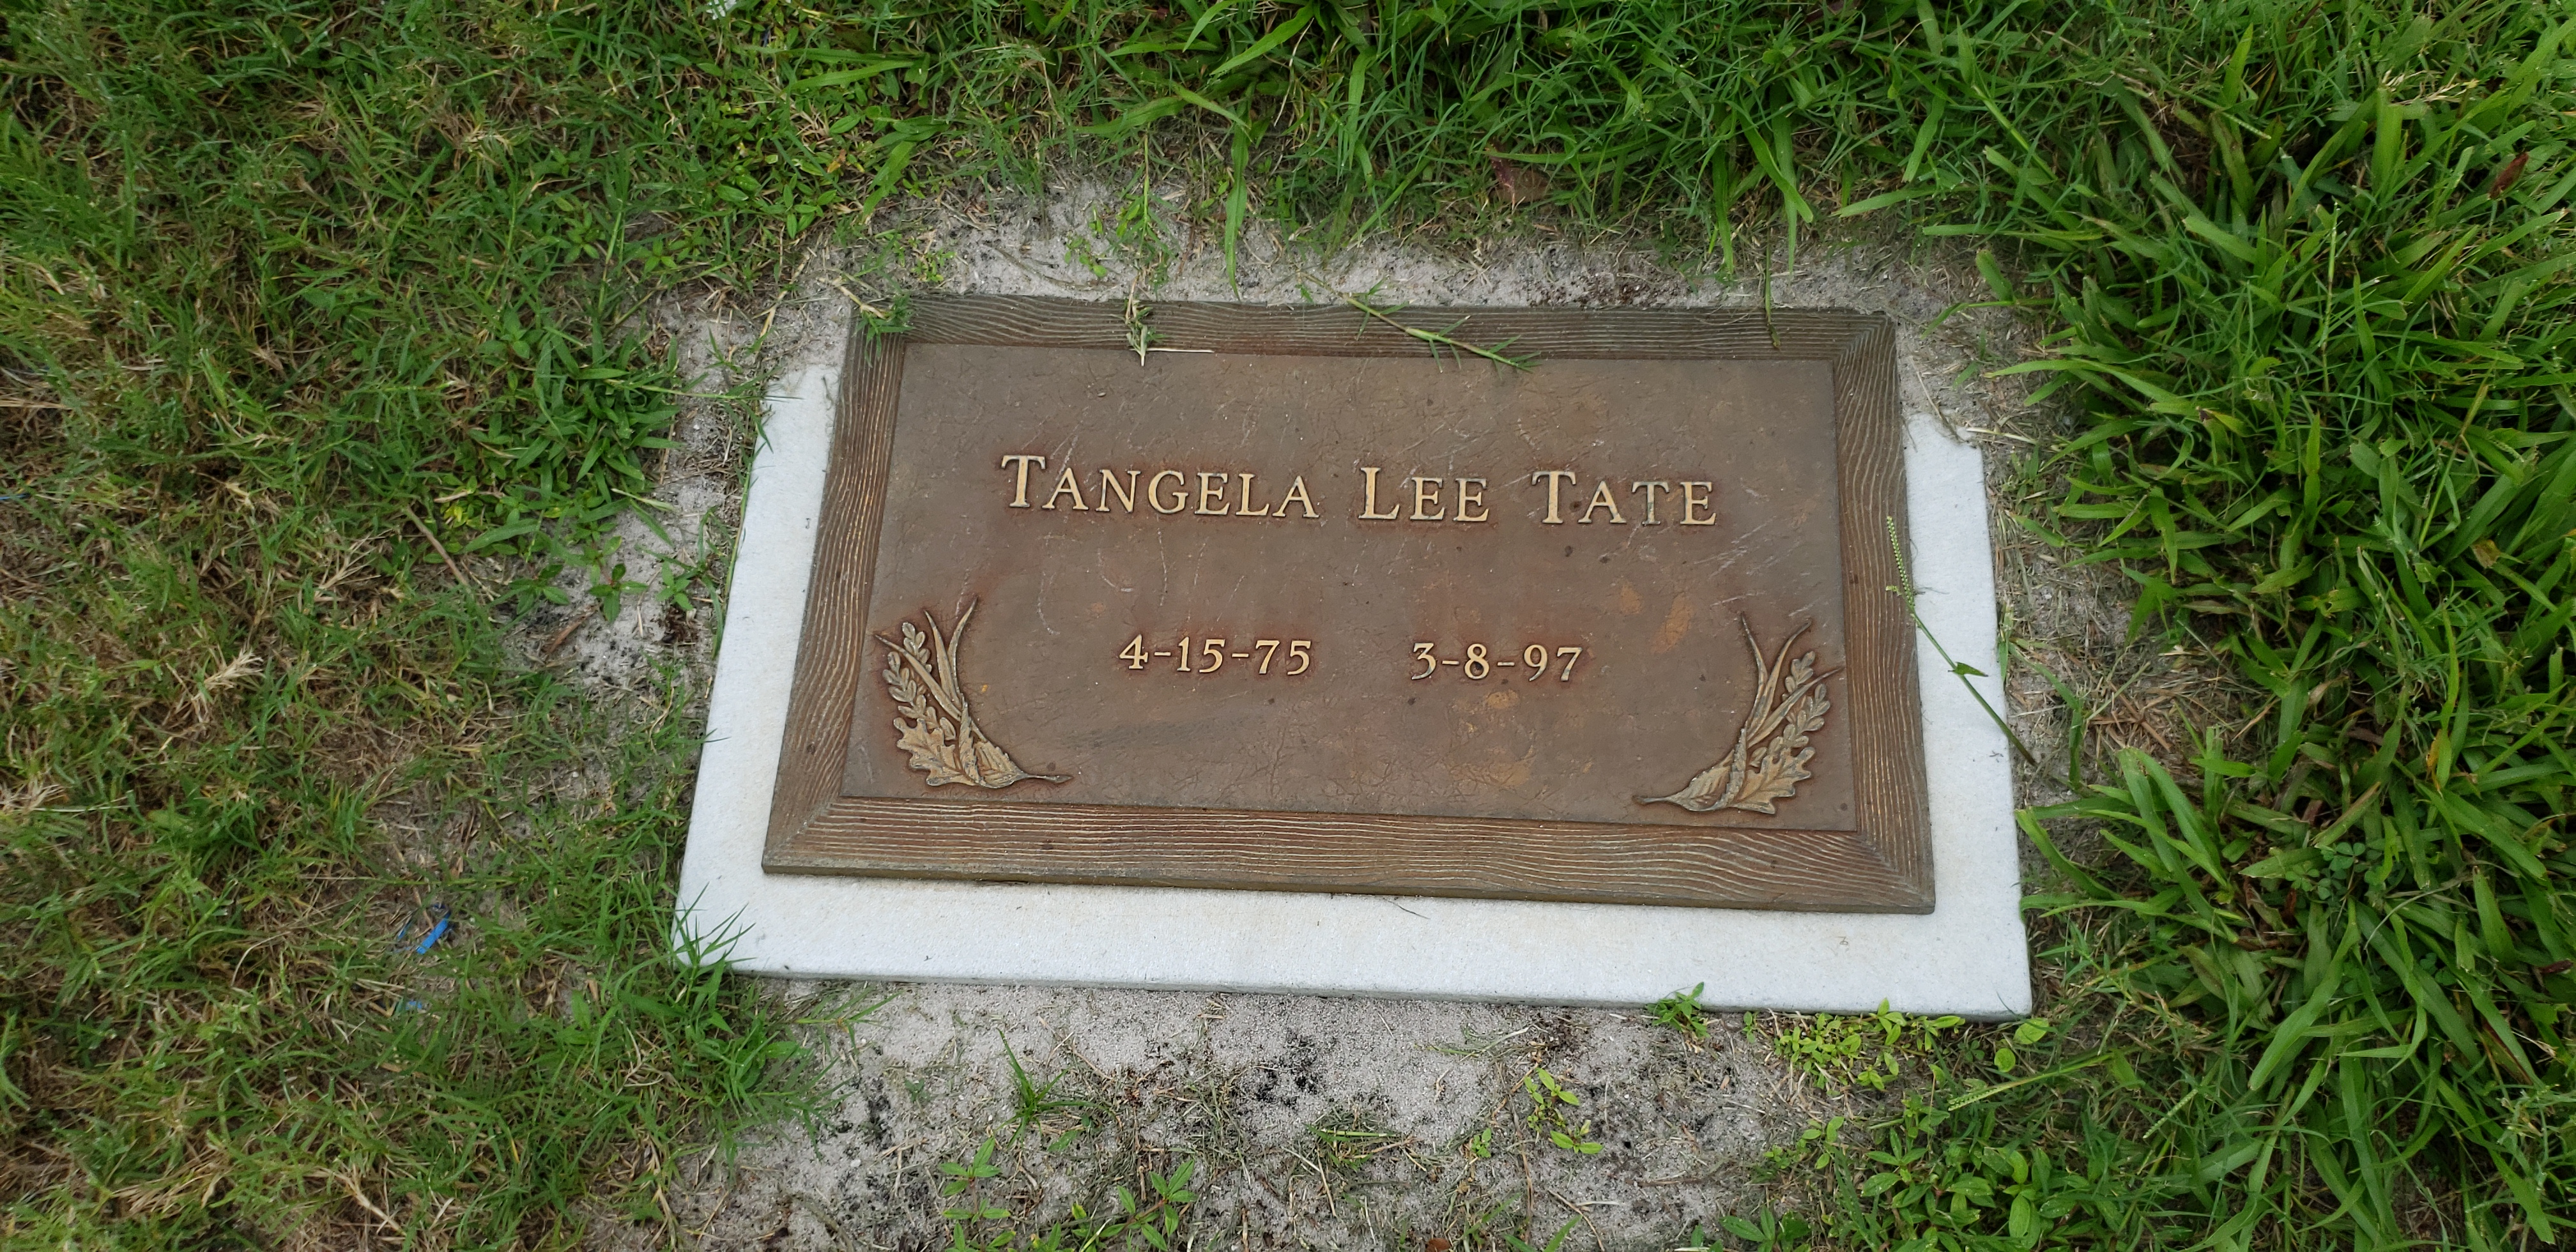 Tangela Lee Tate